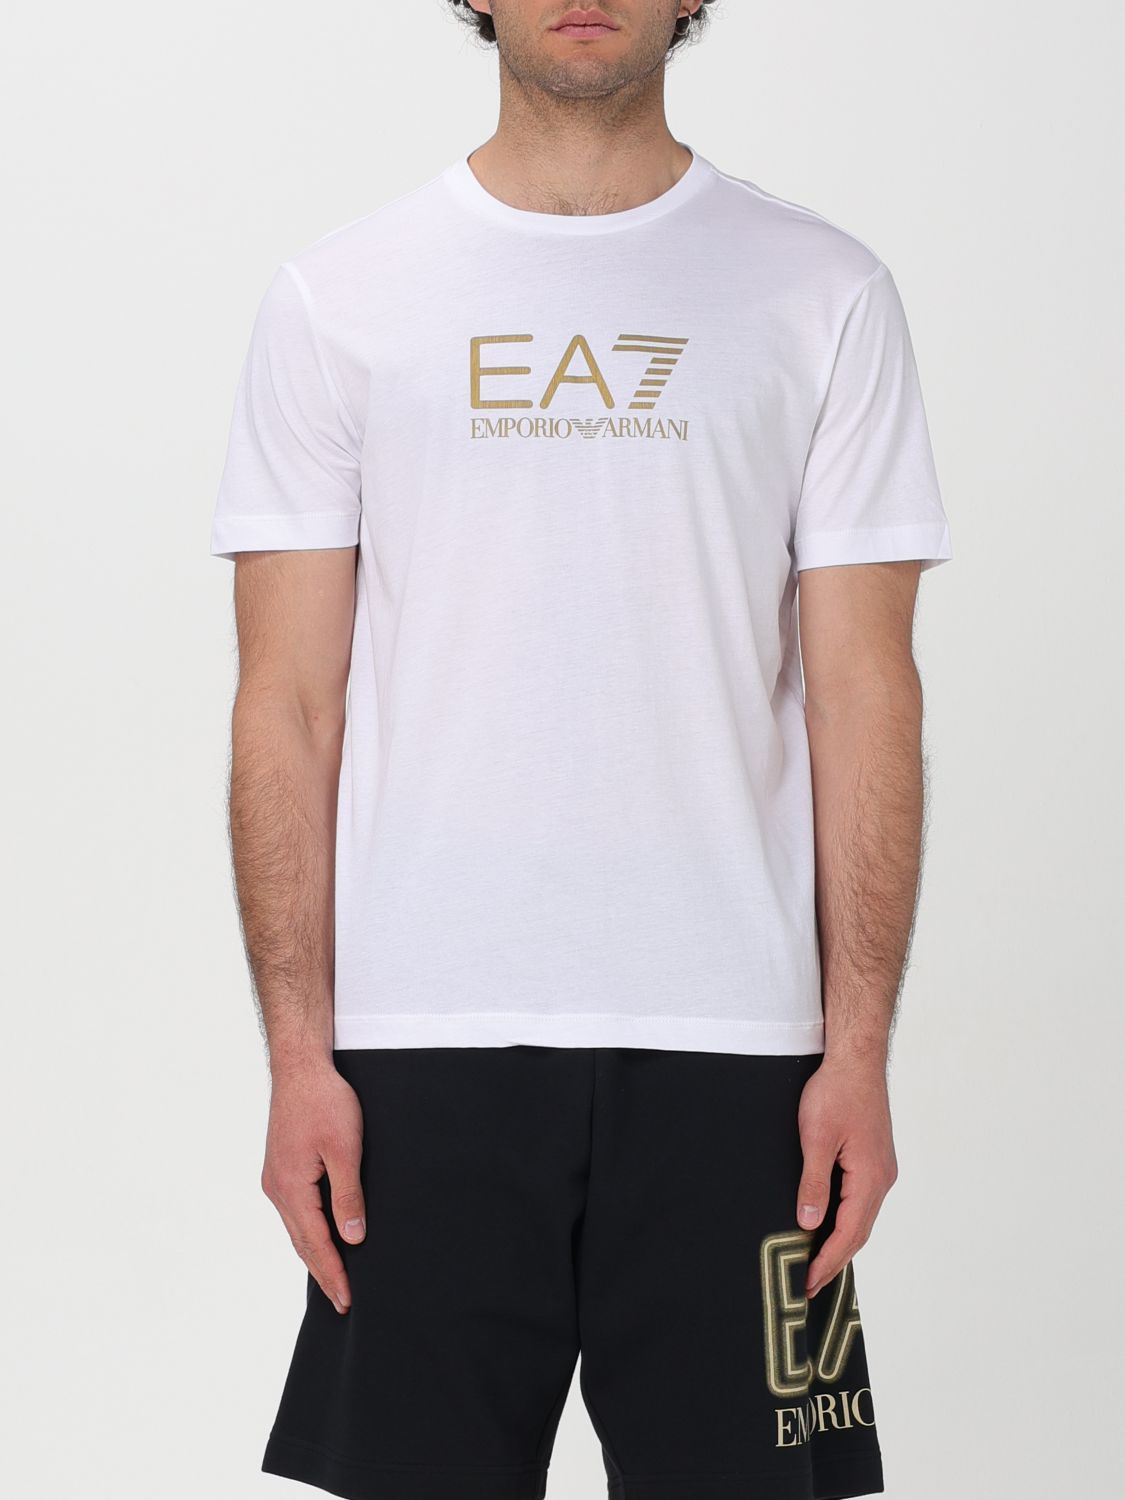 Ea7 T-shirt  Men In 白色